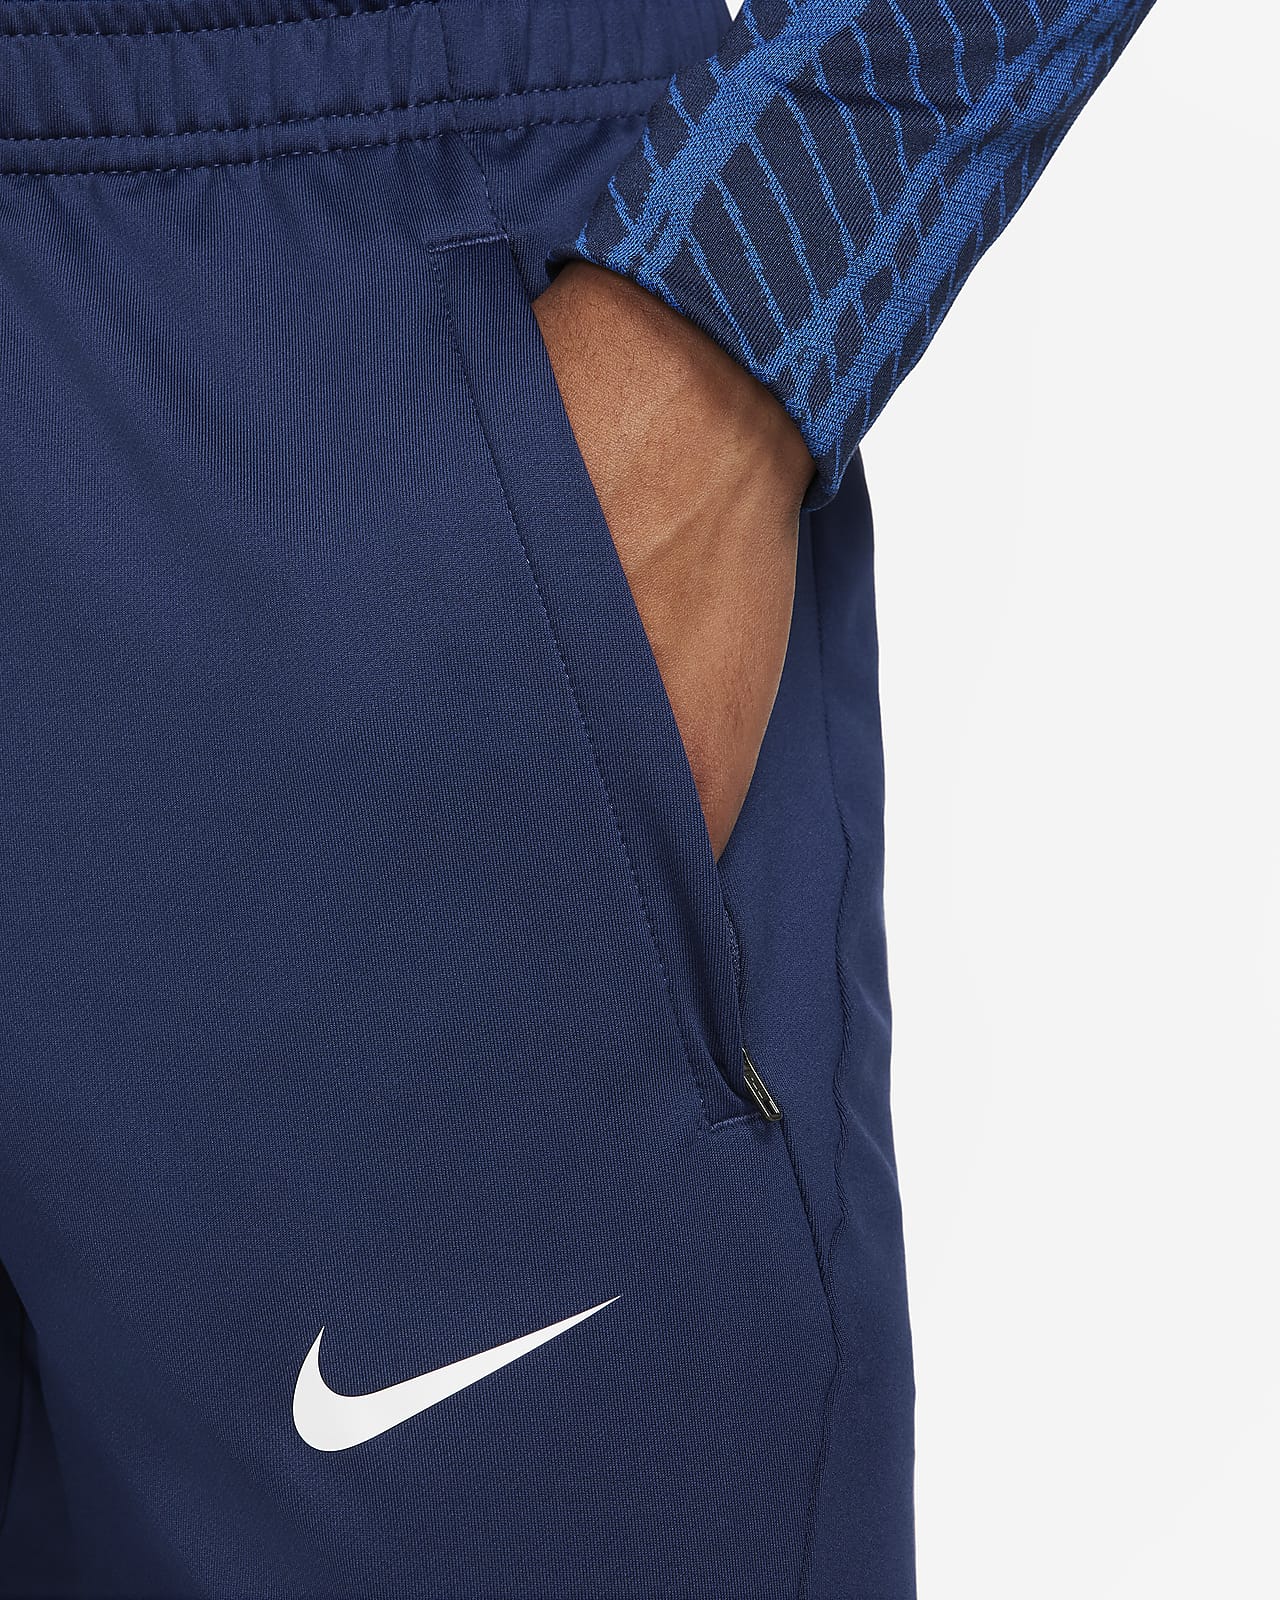 Nike Dri-FIT Strike Men's Soccer Pants